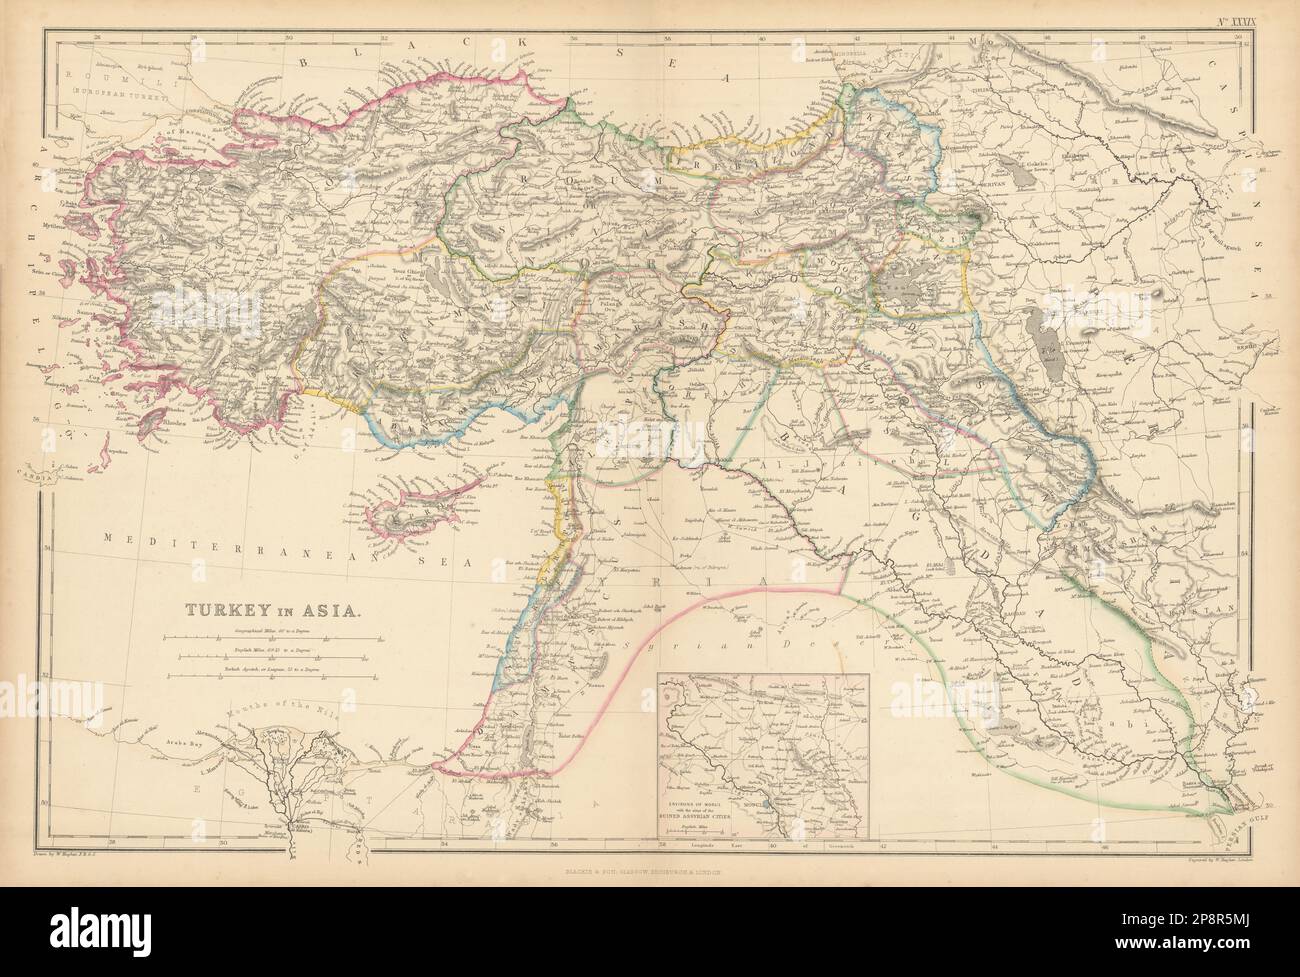 Turkey in Asia. Mosul Assyrian Cities. Koordistan/Kurdistan. HUGHES 1859 map Stock Photo